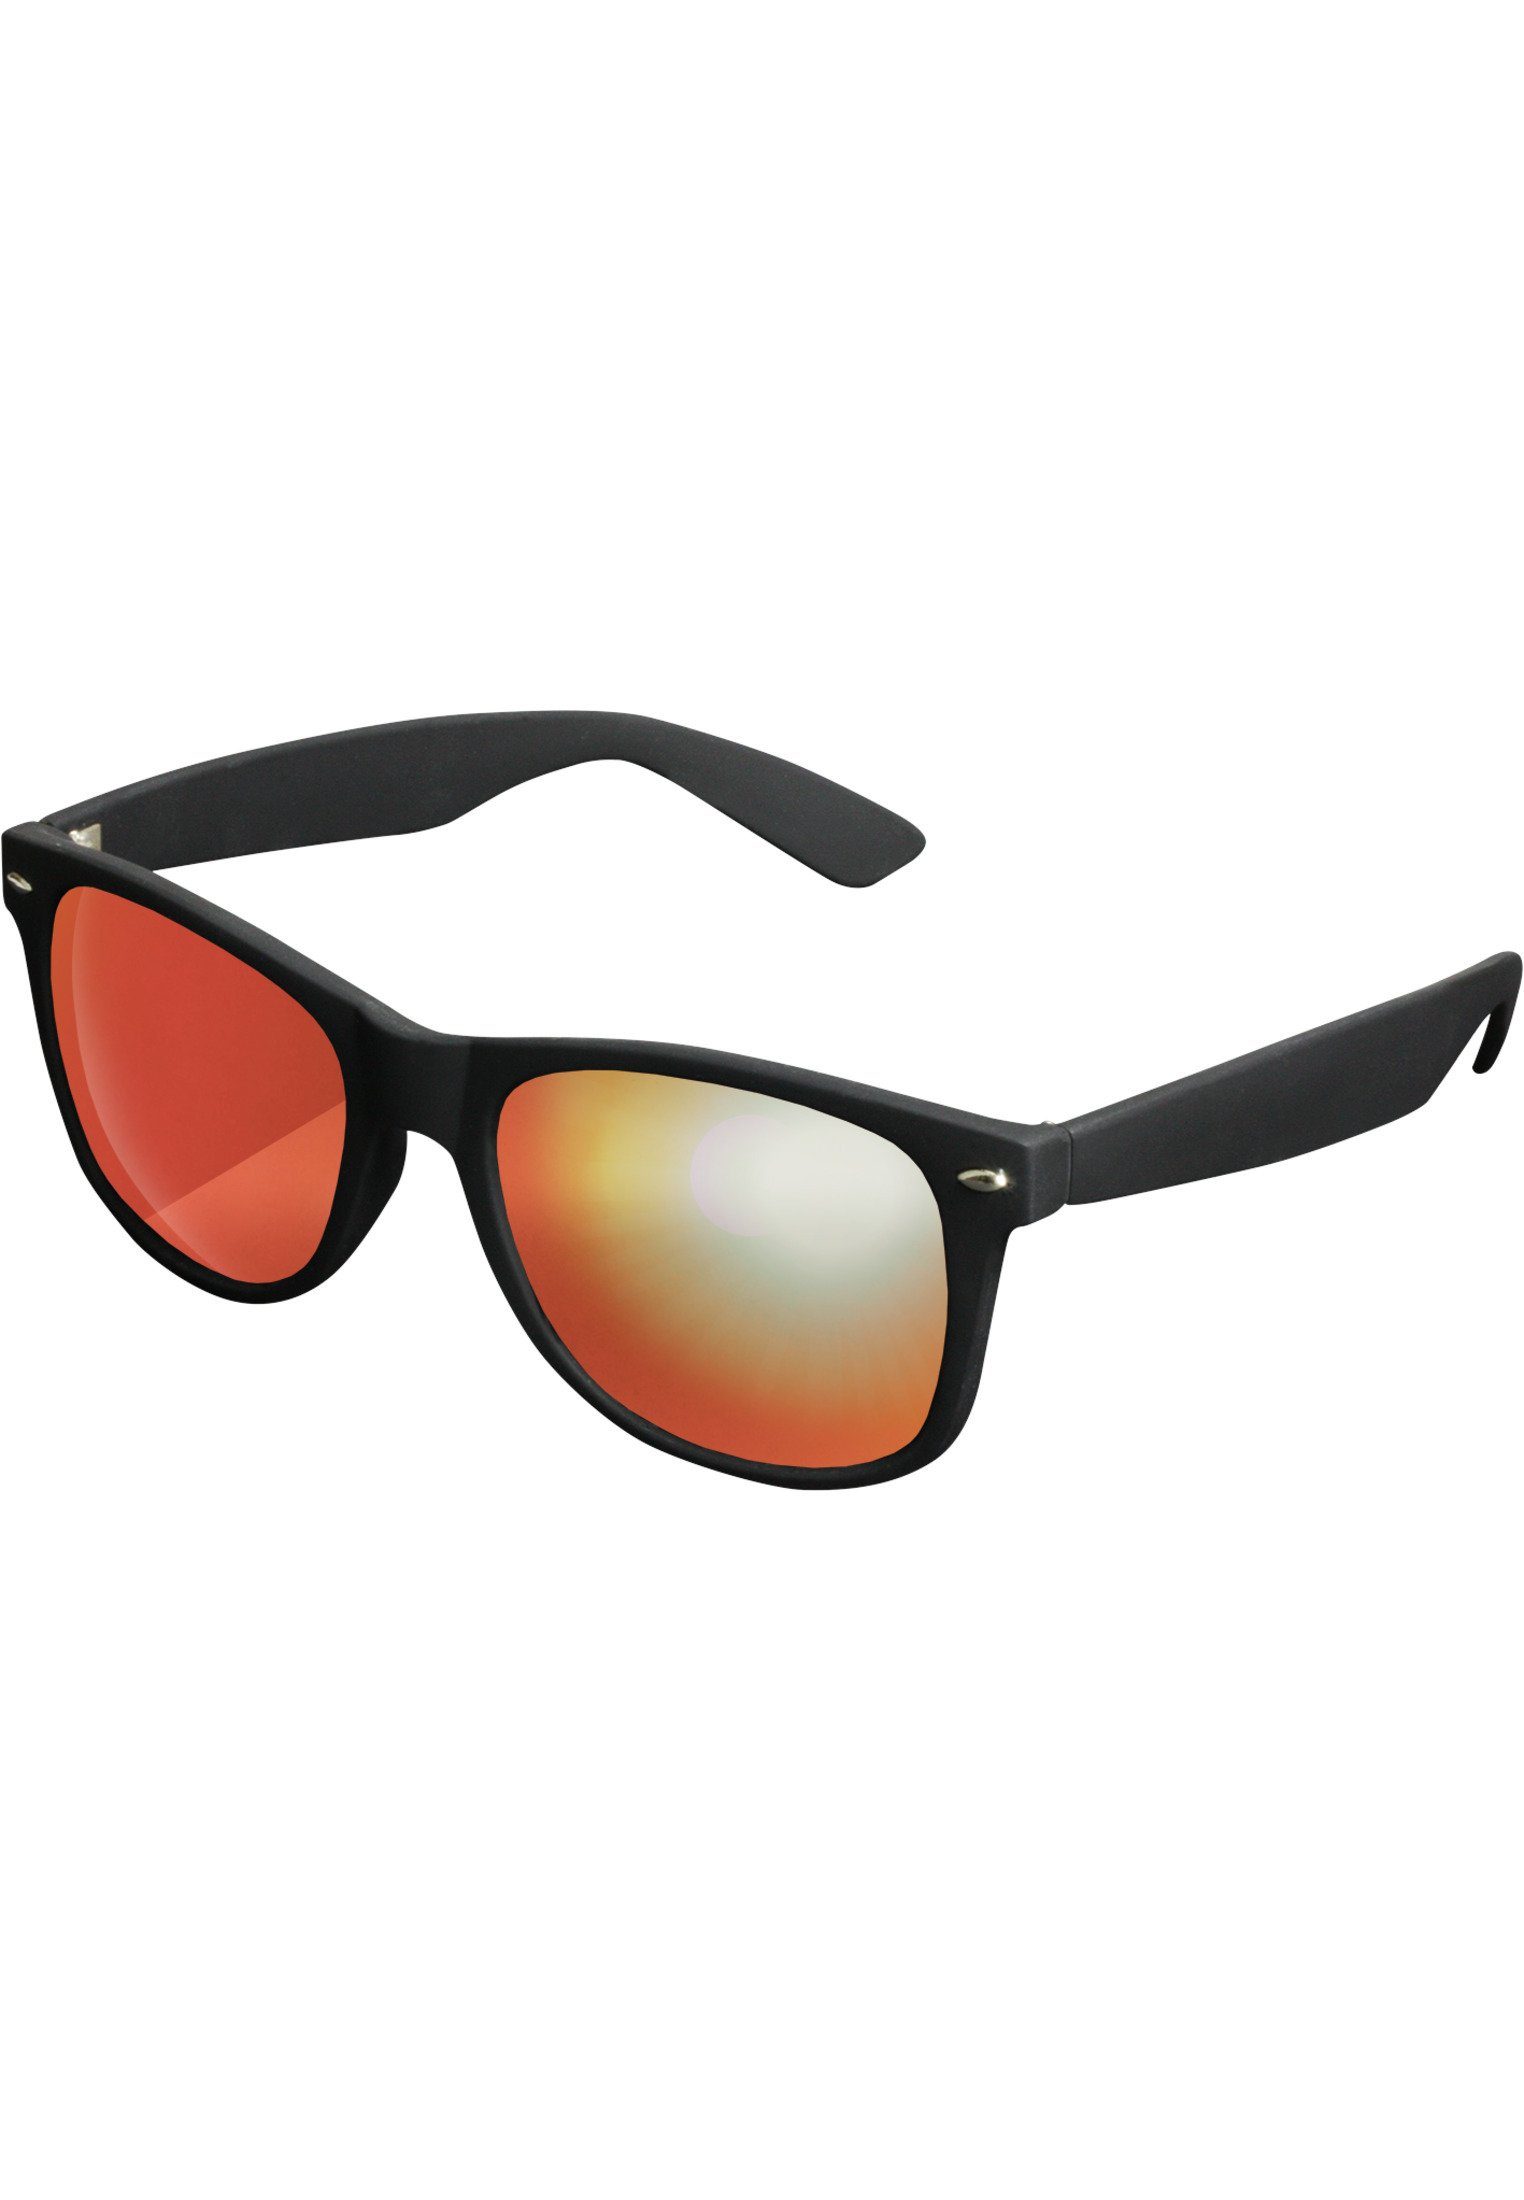 Accessoires Mirror MSTRDS Sunglasses Likoma Sonnenbrille blk/red